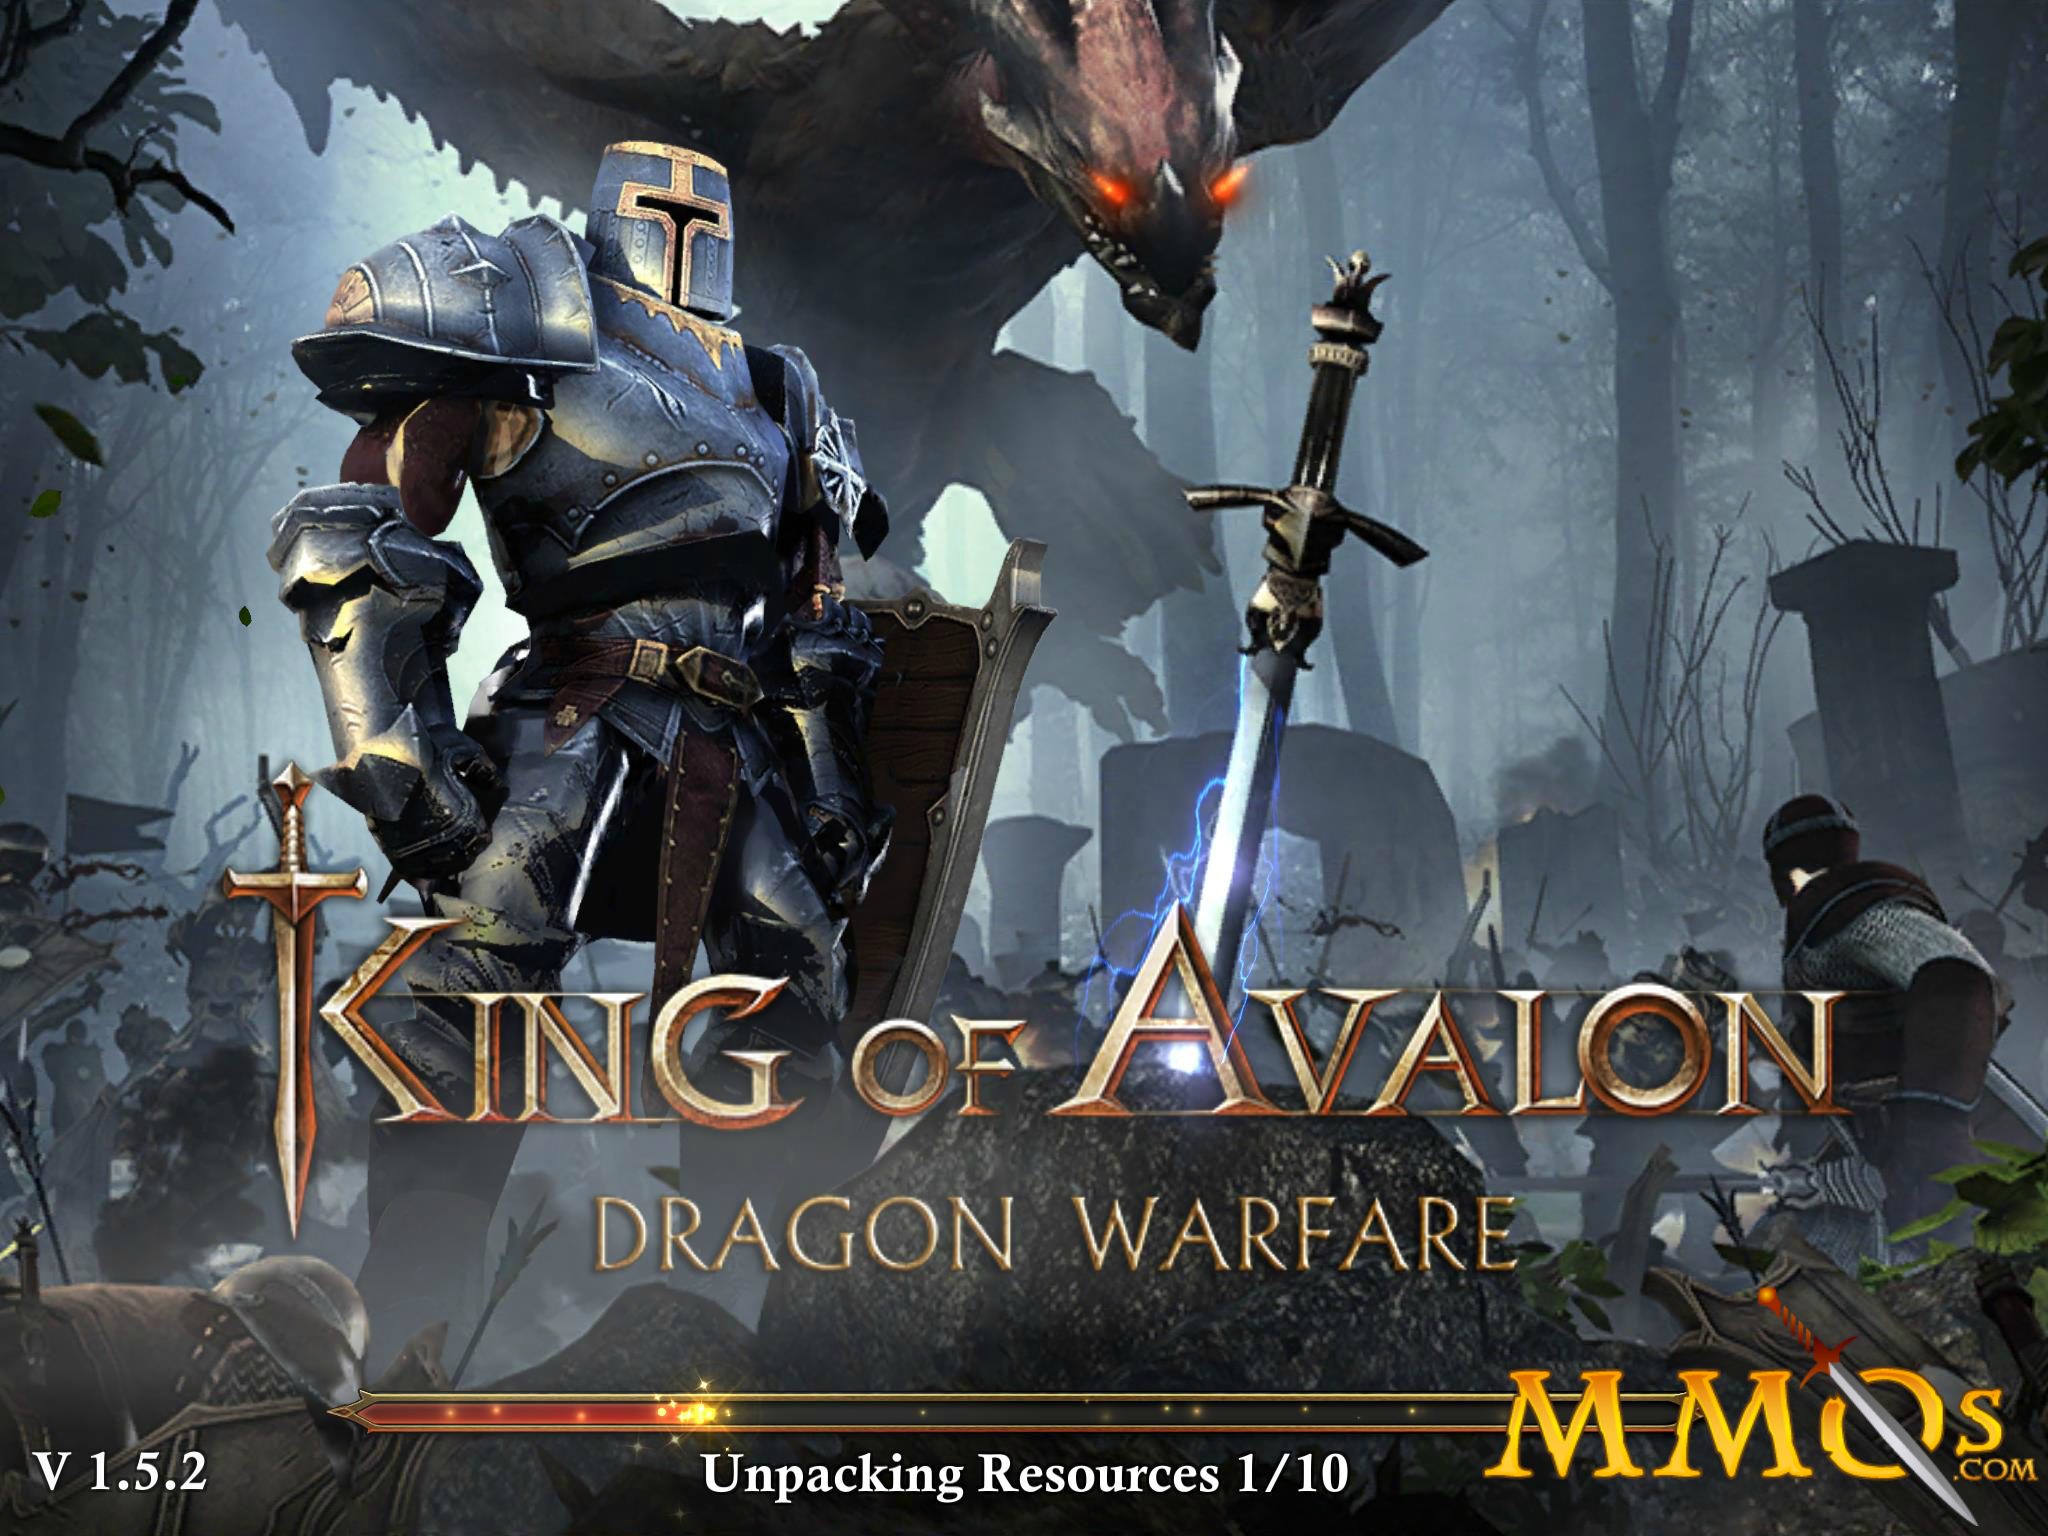 King of Avalon Dragon Warfare Game Review